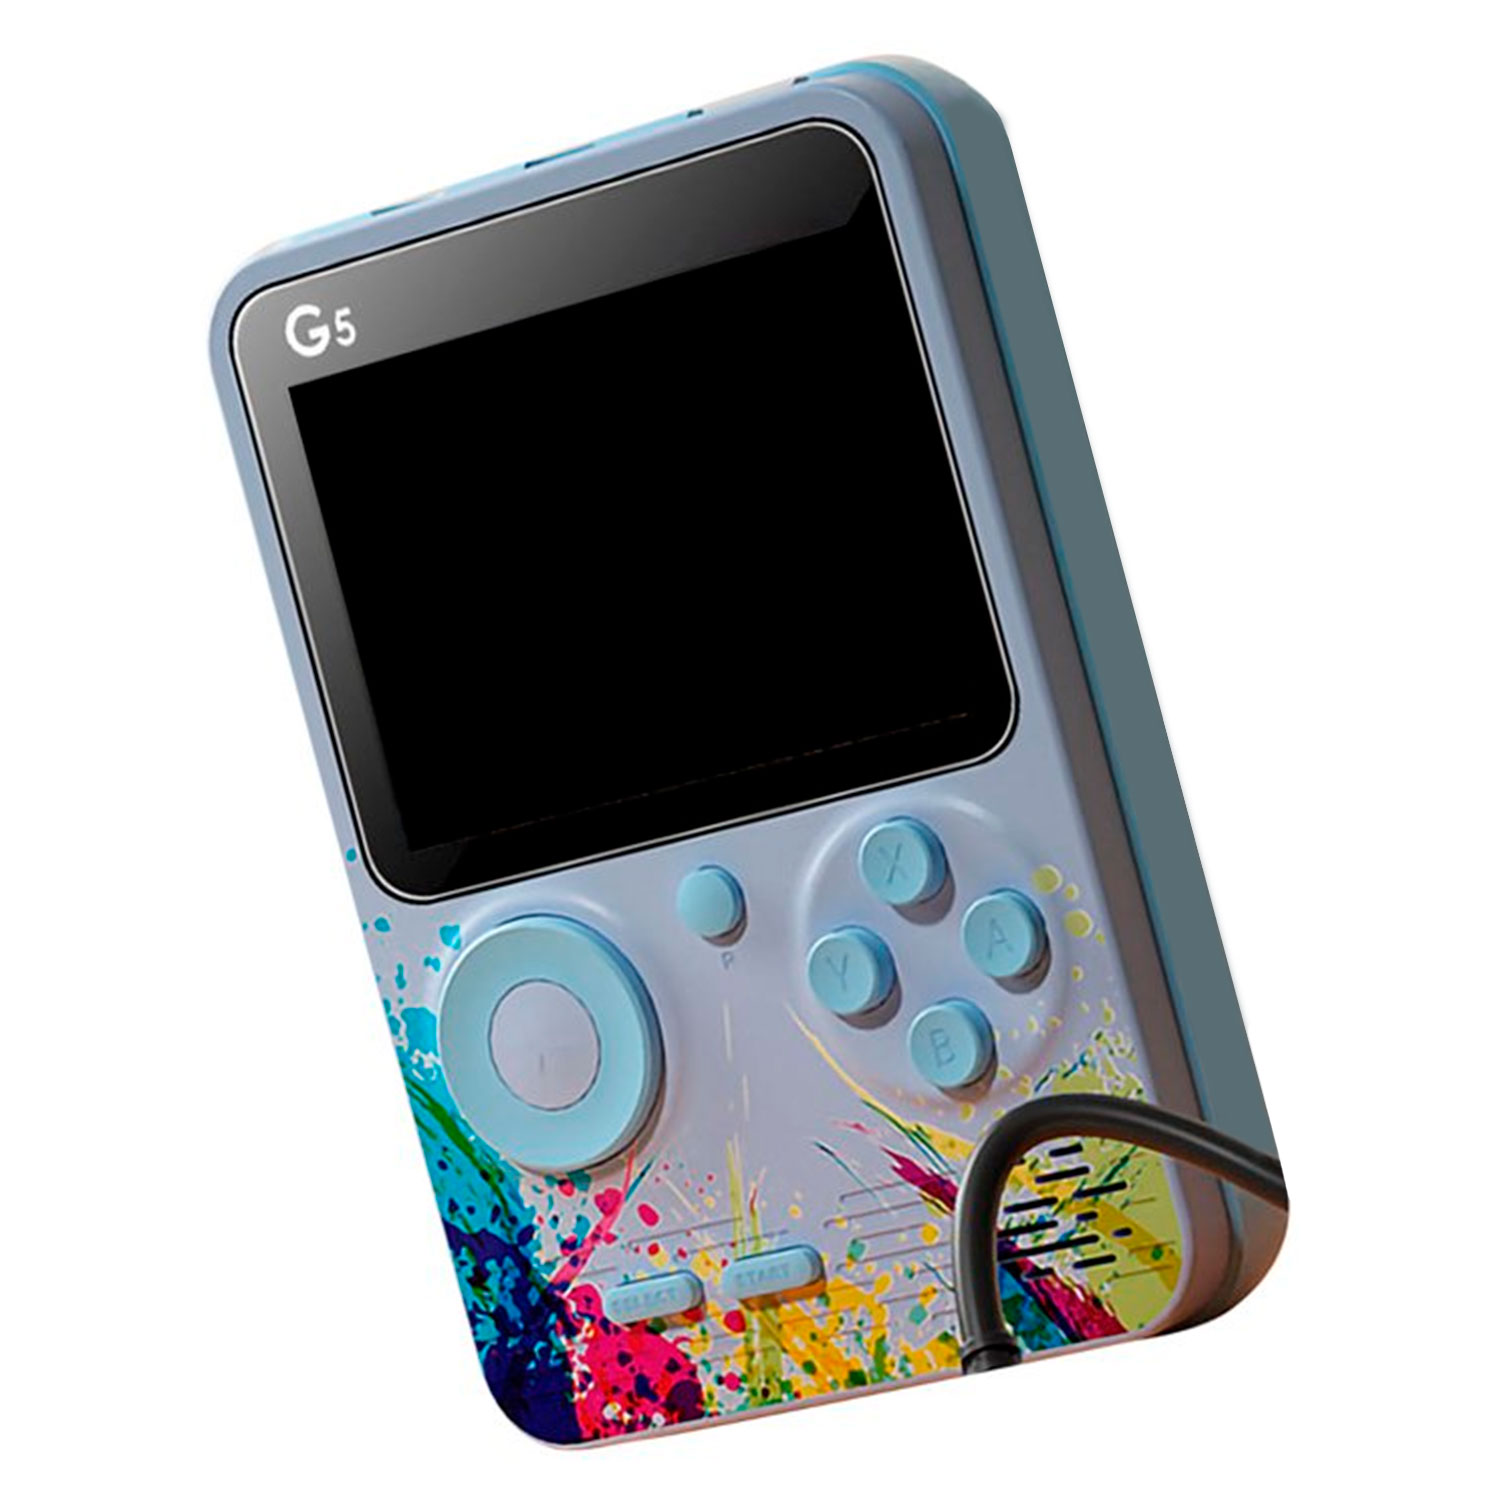 Console Portátil Game Boy Game Box G5 500 Jogos - Cinza